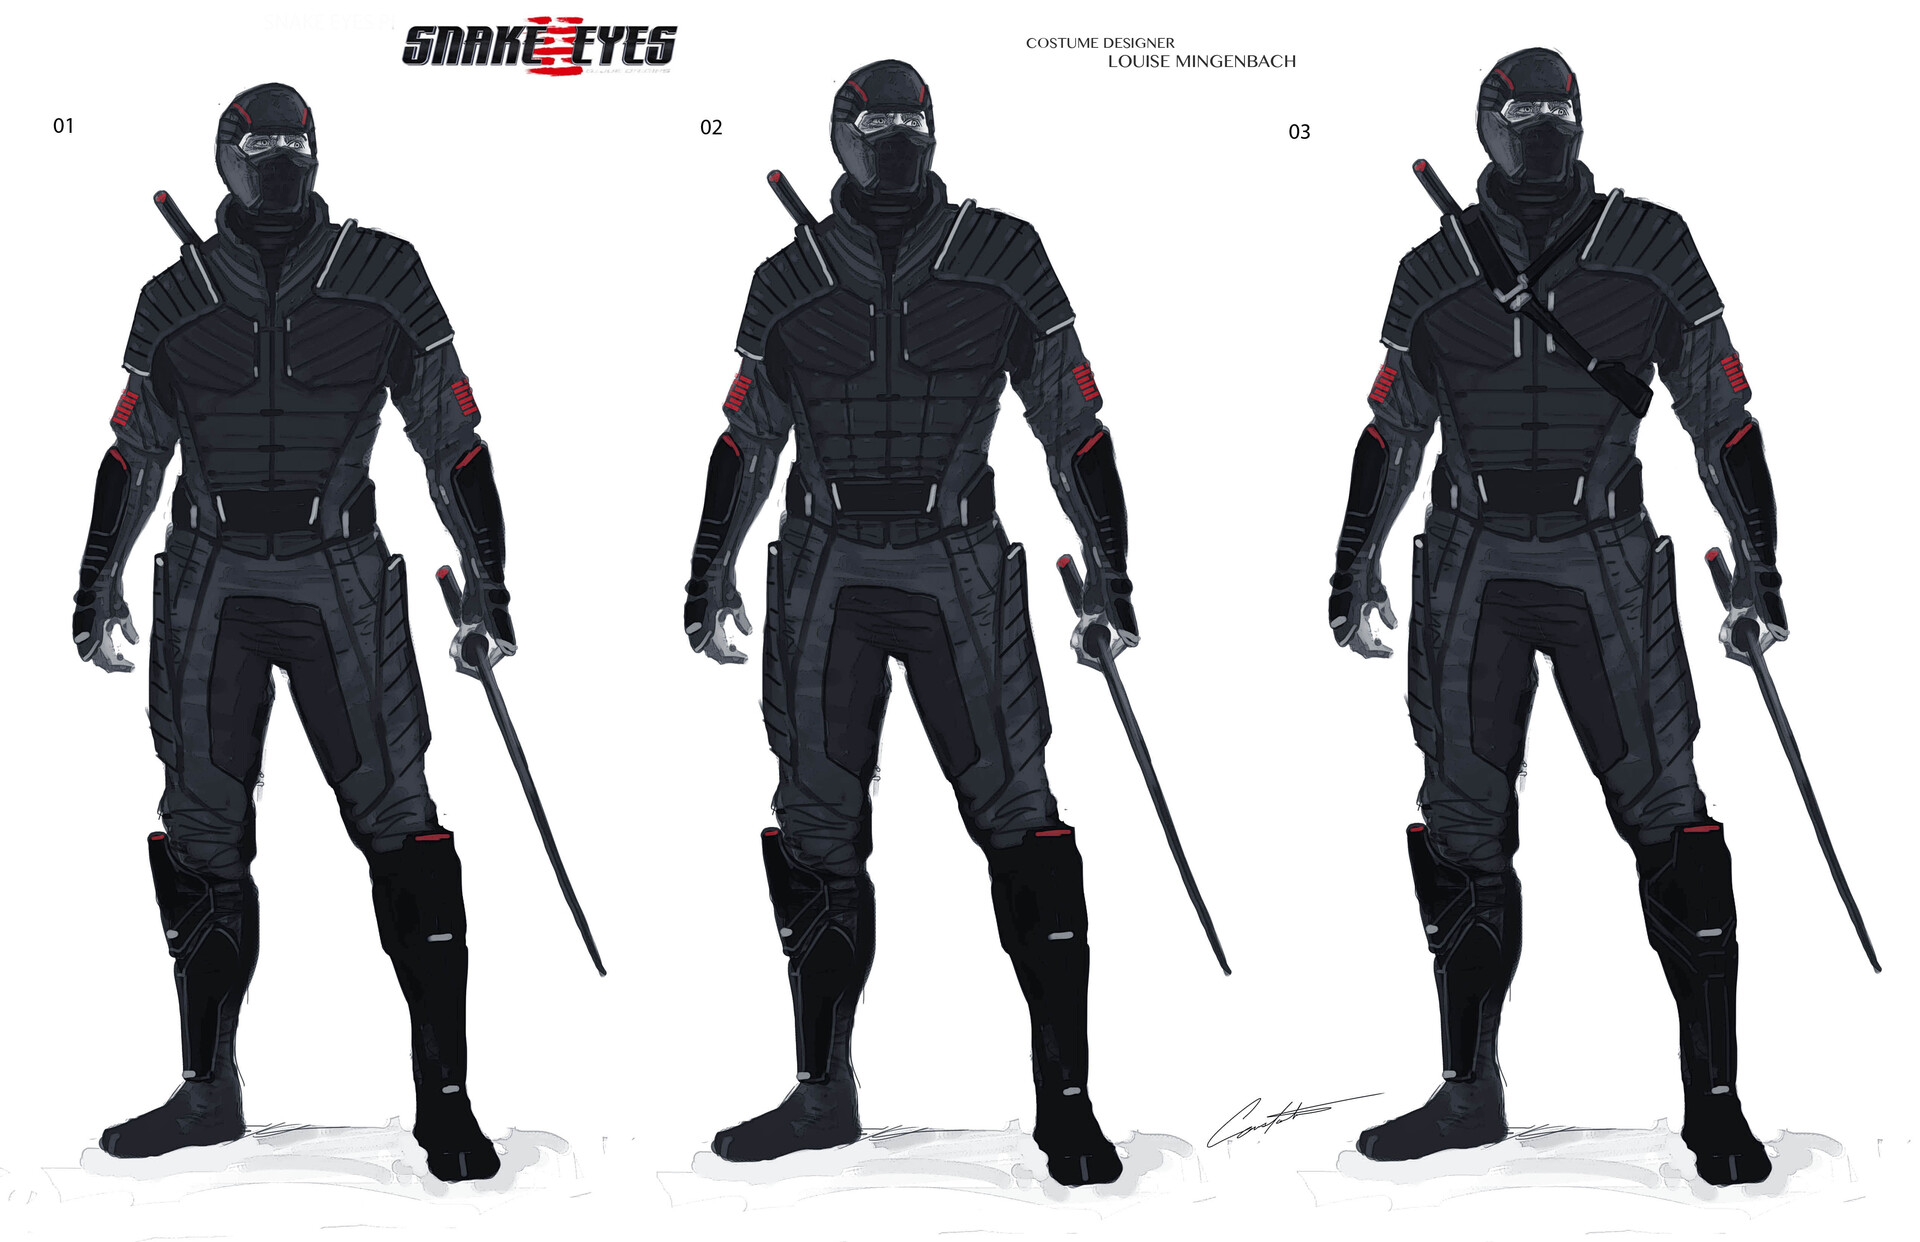 Snake Eyes Gi Joe Origins Costume Concepts.